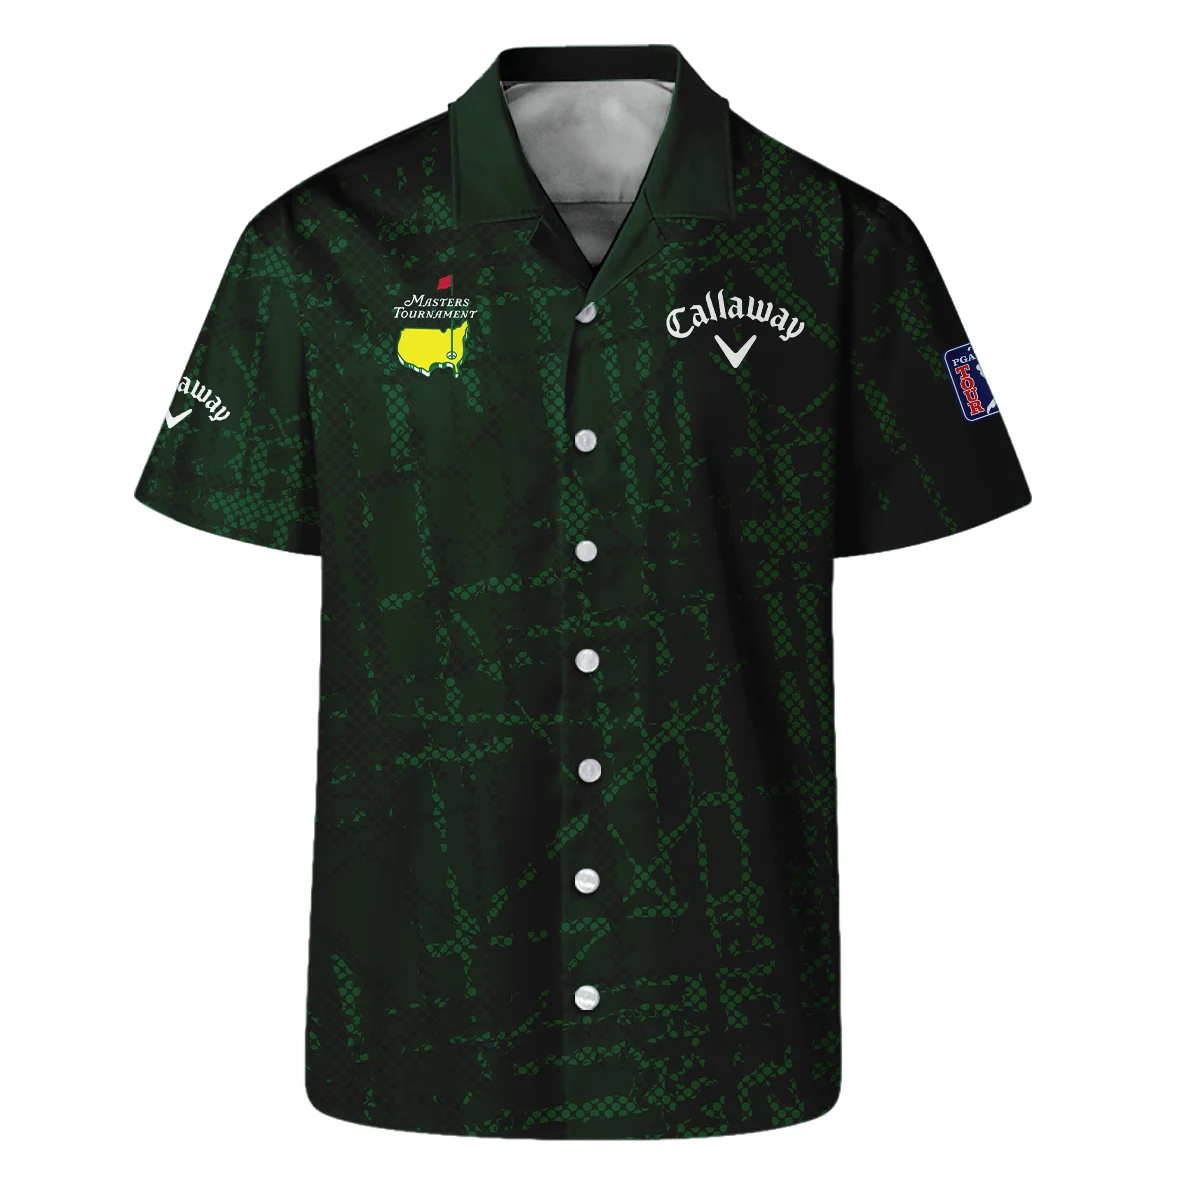 Masters Tournament Callaway Golf Pattern Halftone Green Quarter-Zip Jacket Style Classic Quarter-Zip Jacket